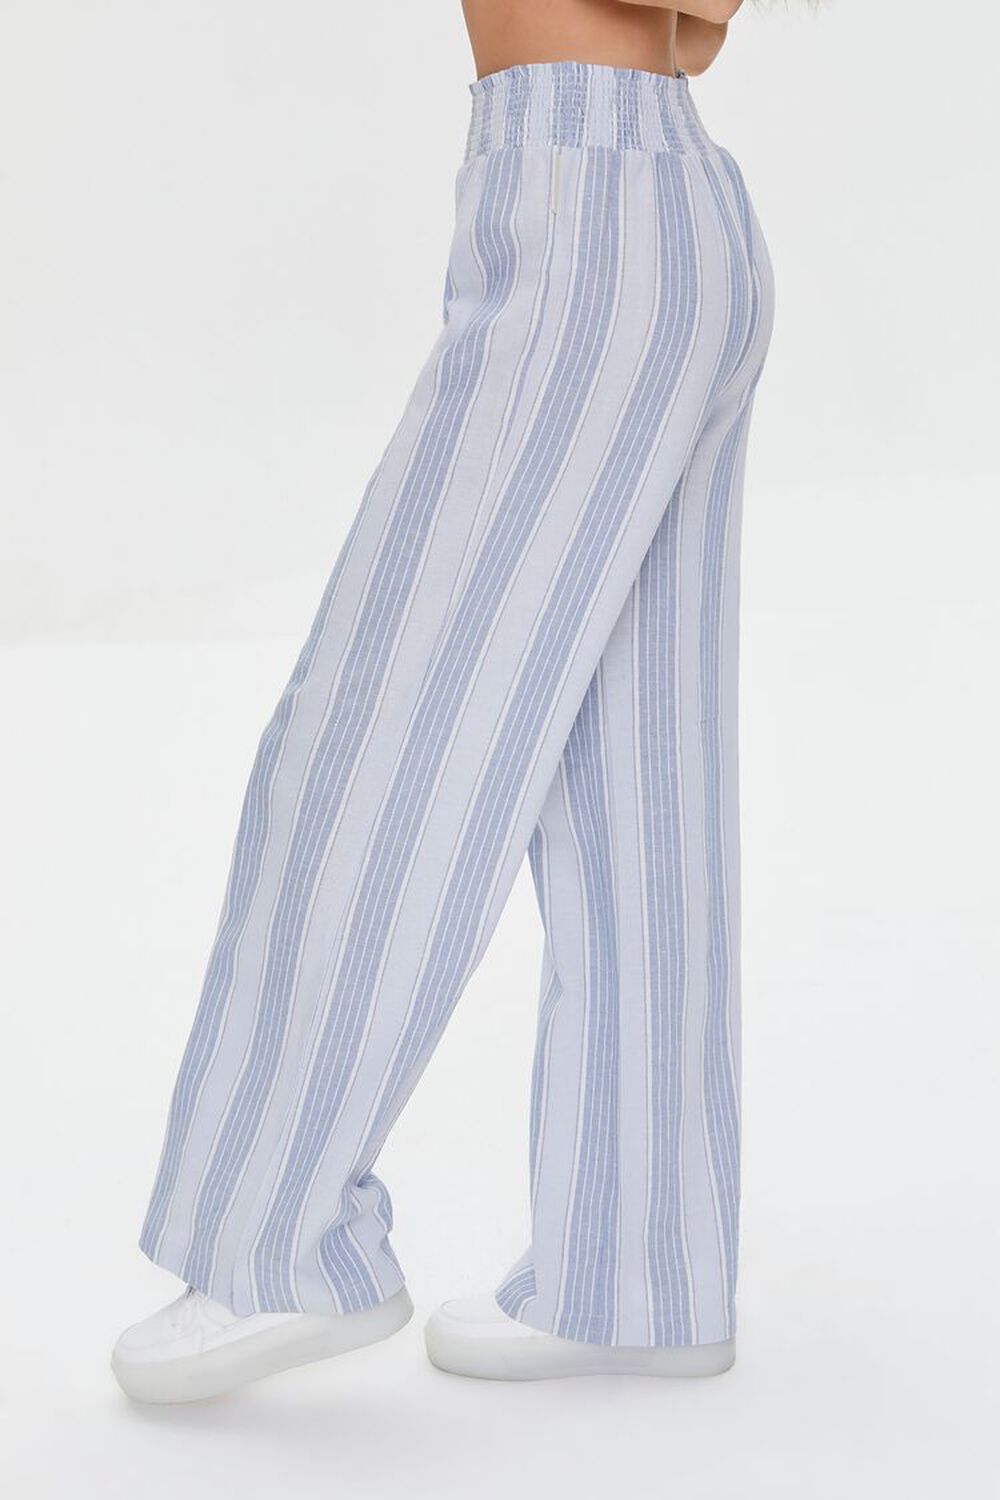 LIGHT BLUE/MULTI Kendall + Kylie Striped Pants, image 3